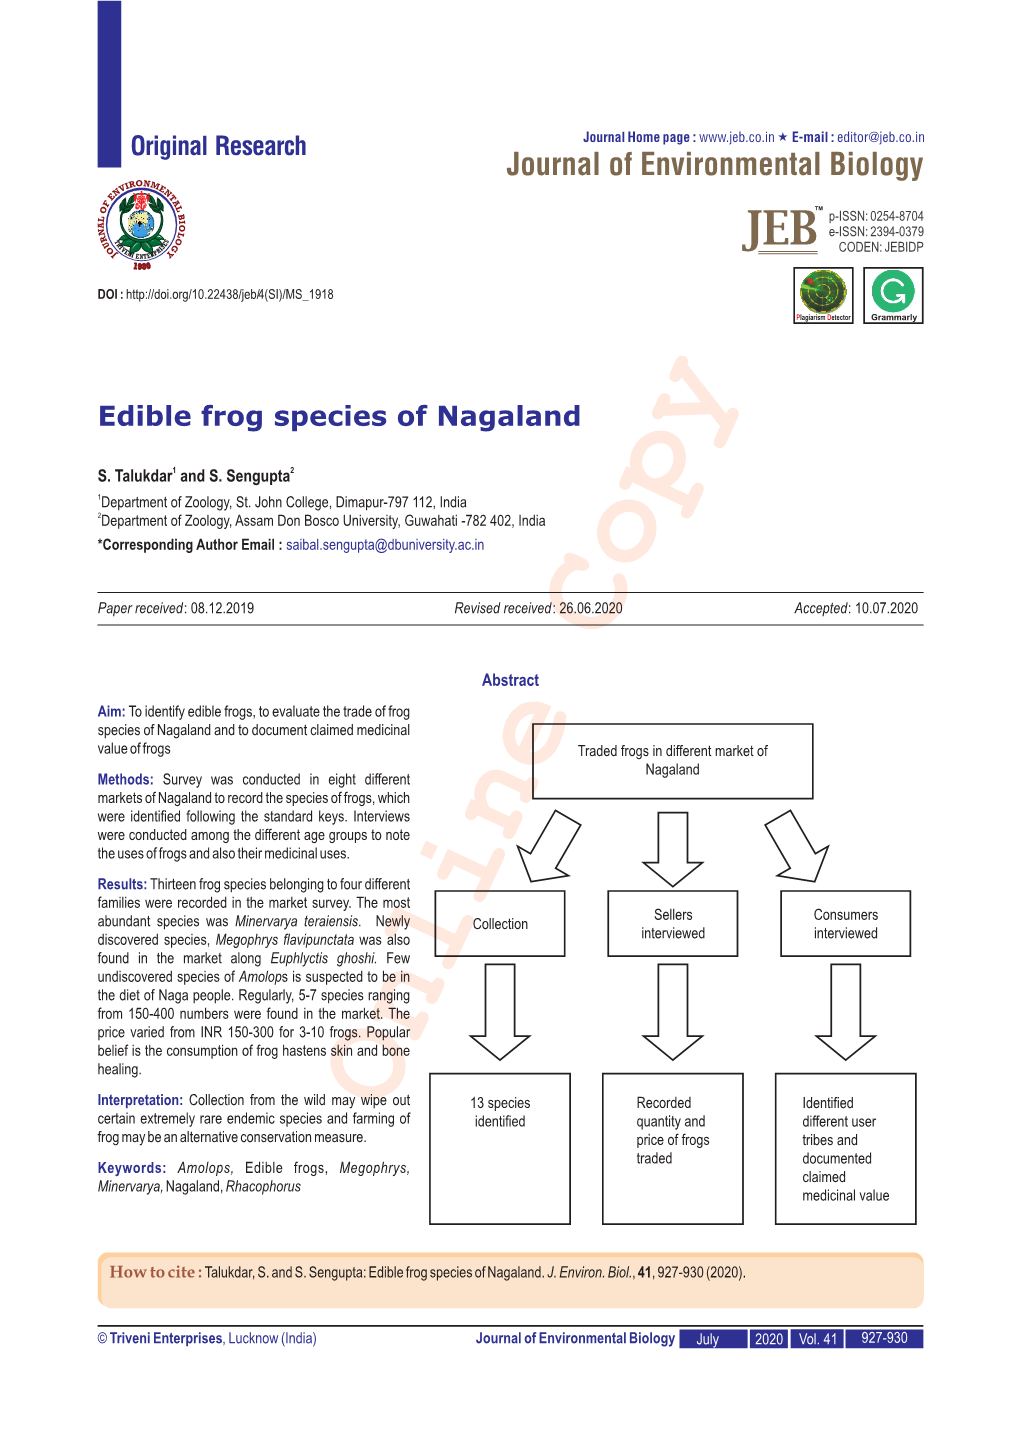 Edible Frog Species of Nagaland